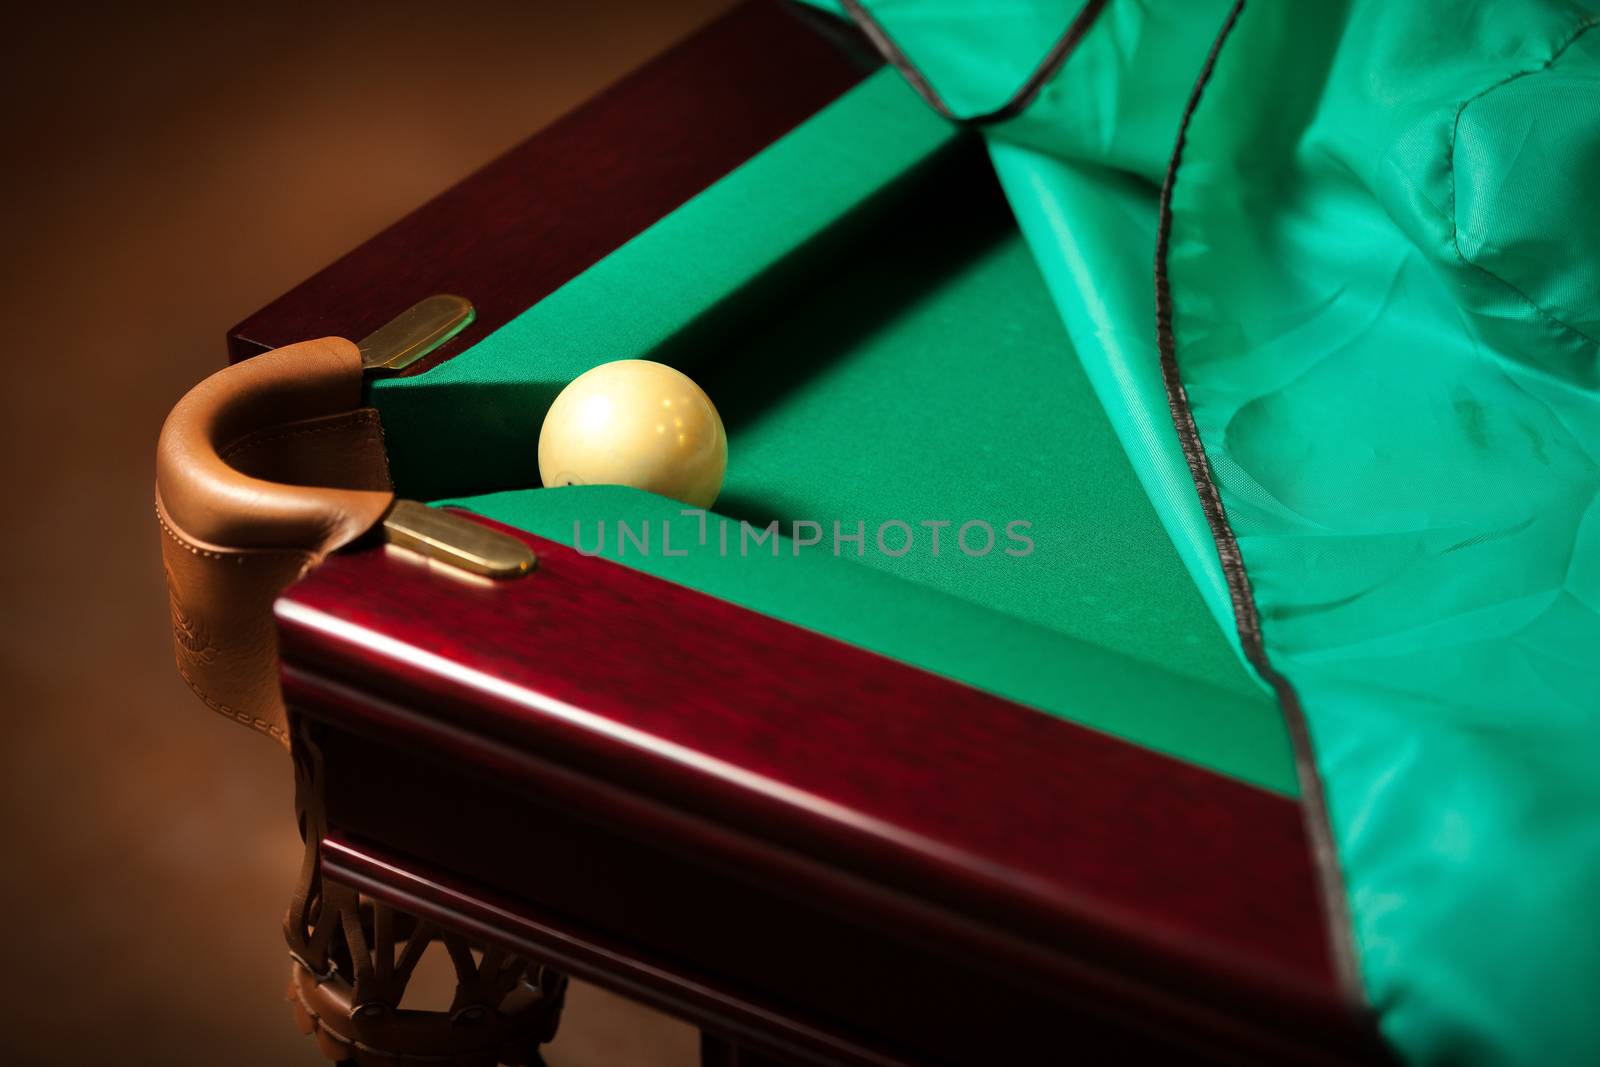 Ball in billiard pocket on table by Kryzhov